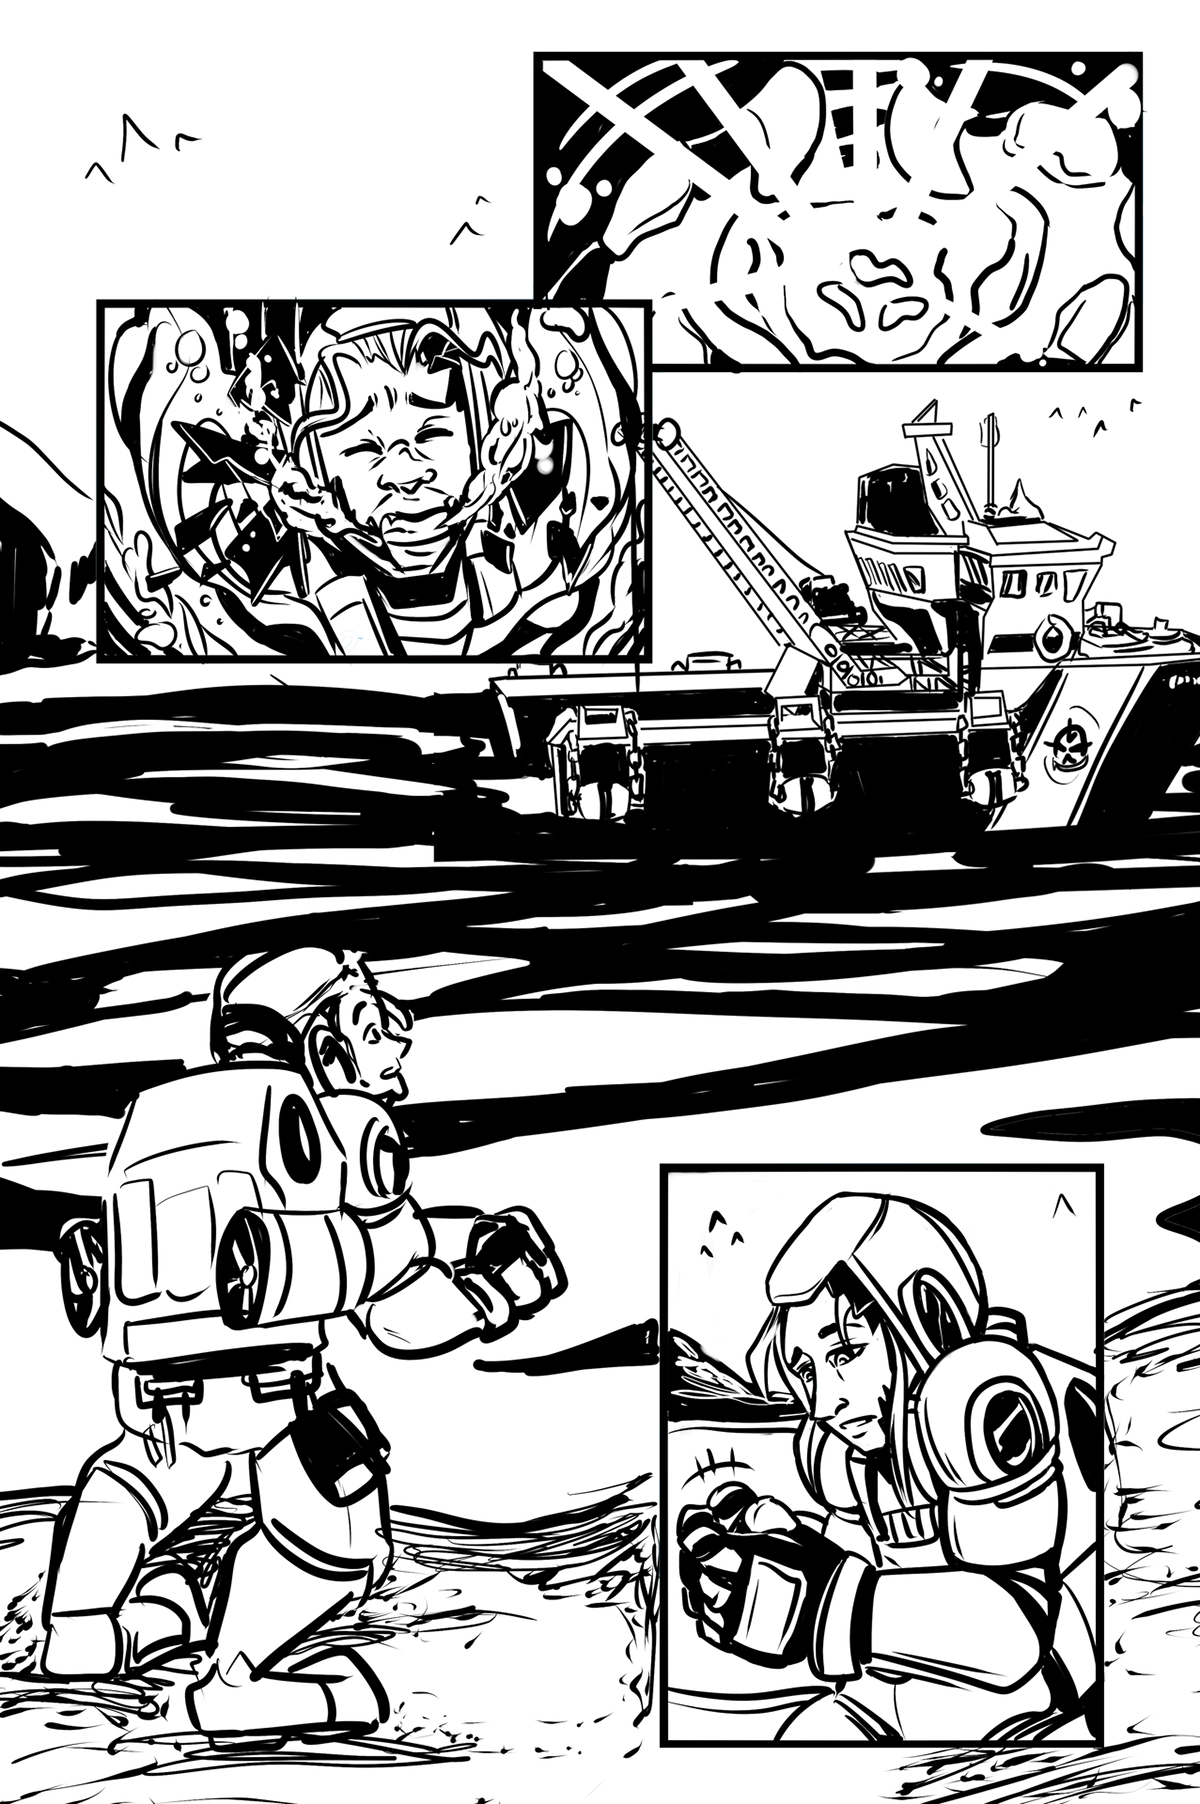 Sequential Art comic comics Story telling fantasy deep sea adventure